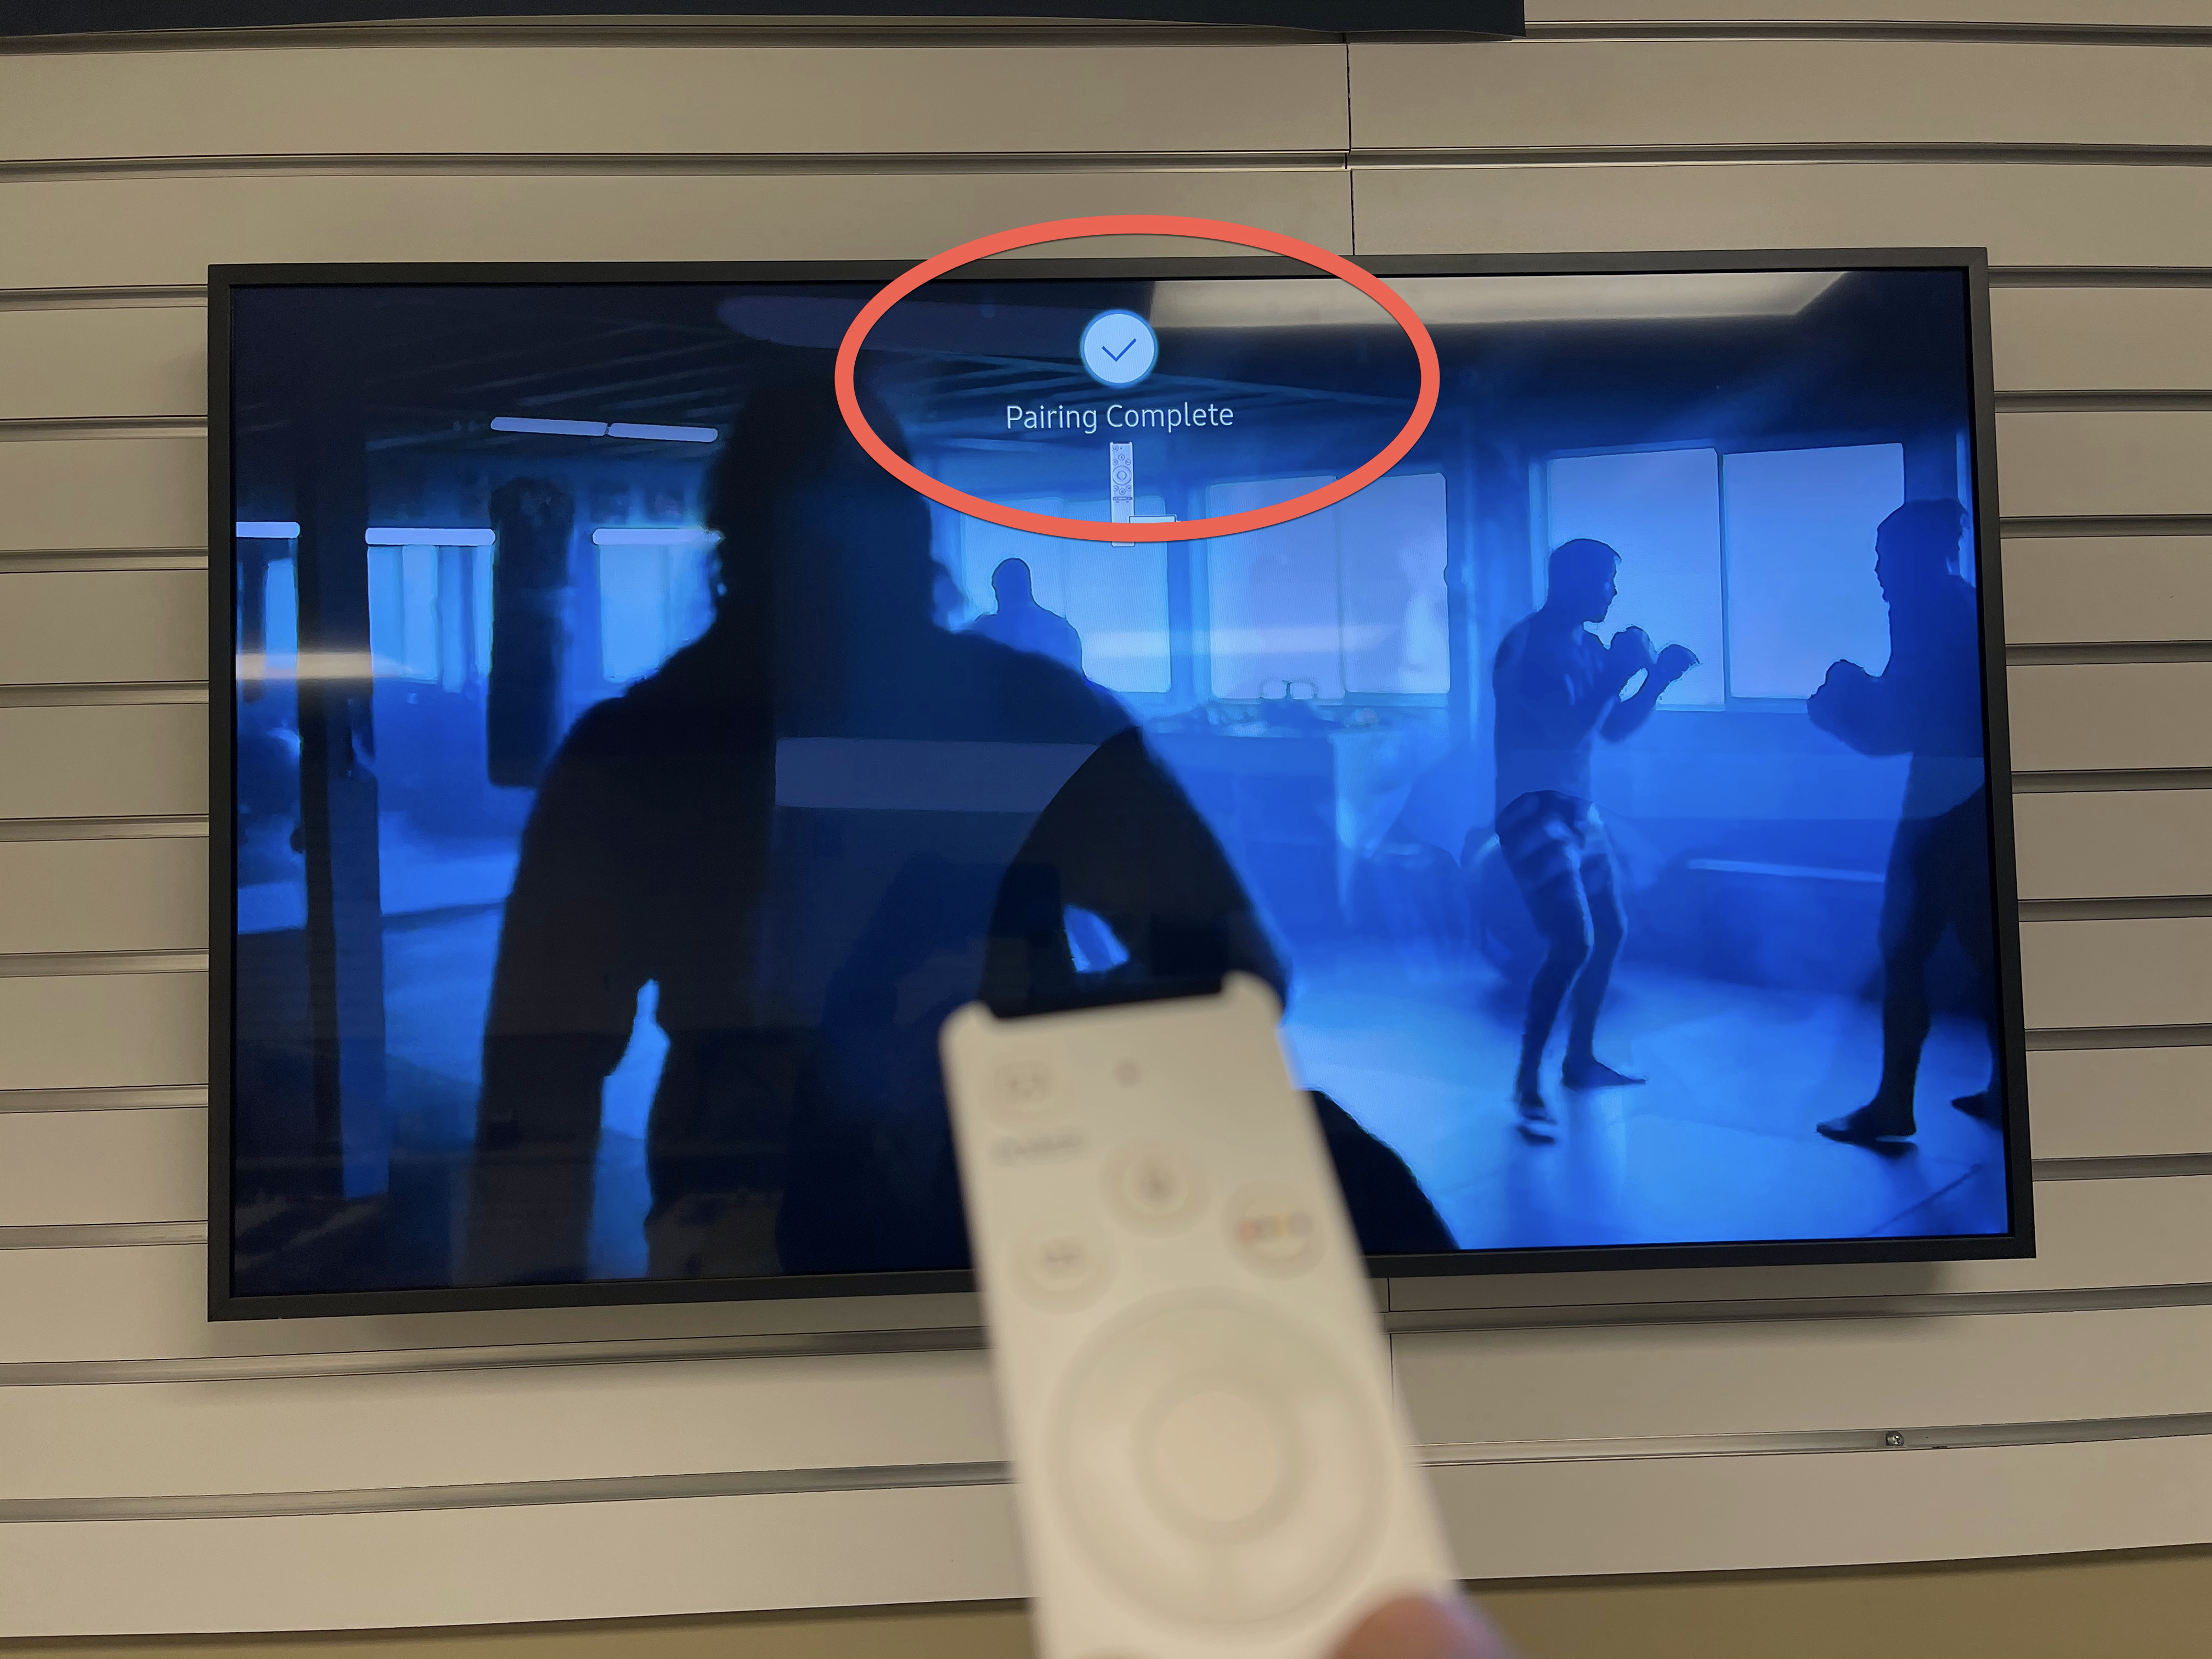 Samsung Frame Tv Remote Not Working Pairing